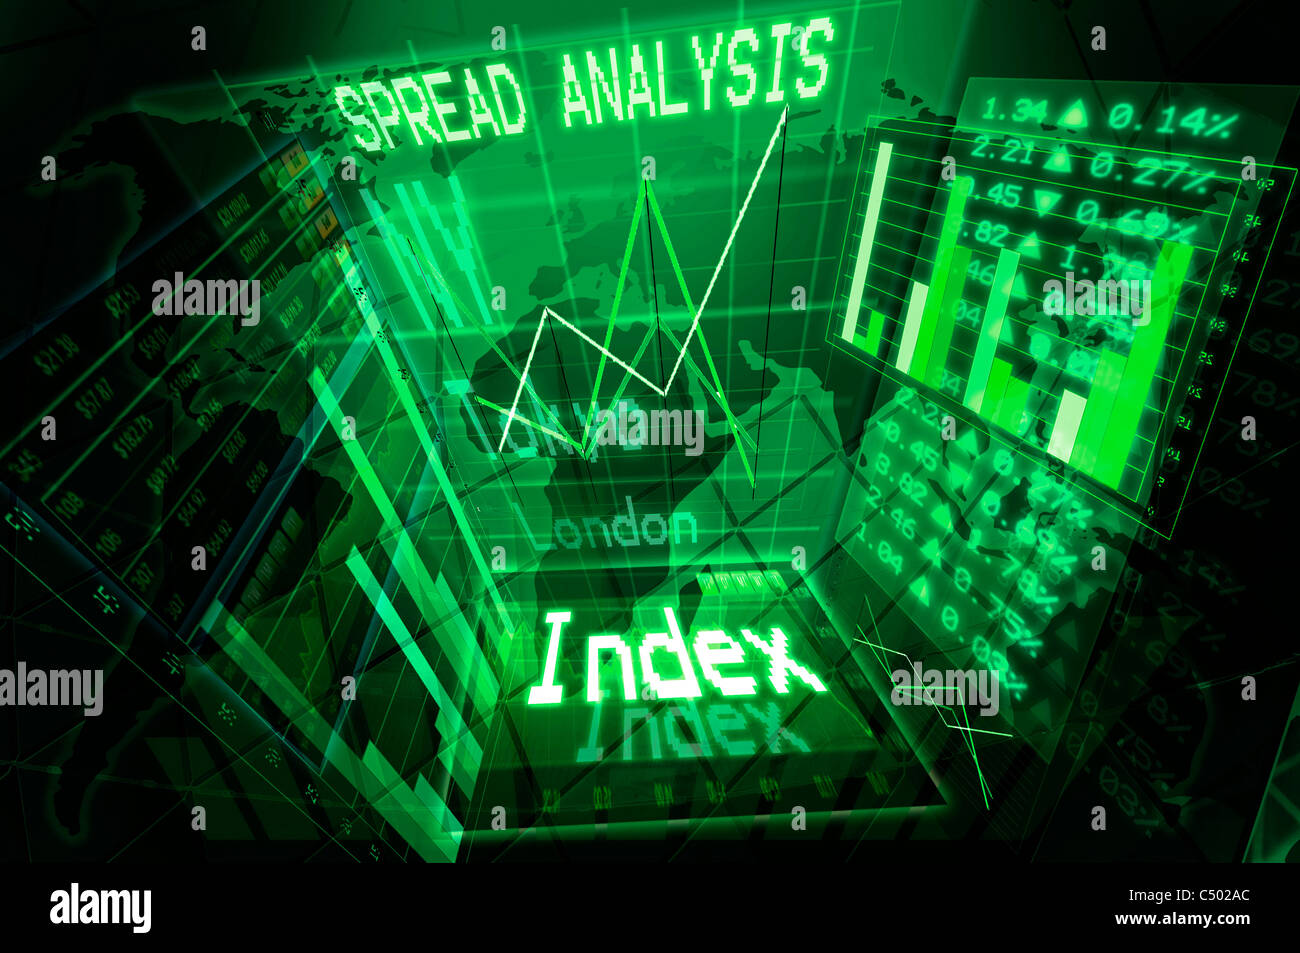 Illustration of a stock exchange background Stock Photo